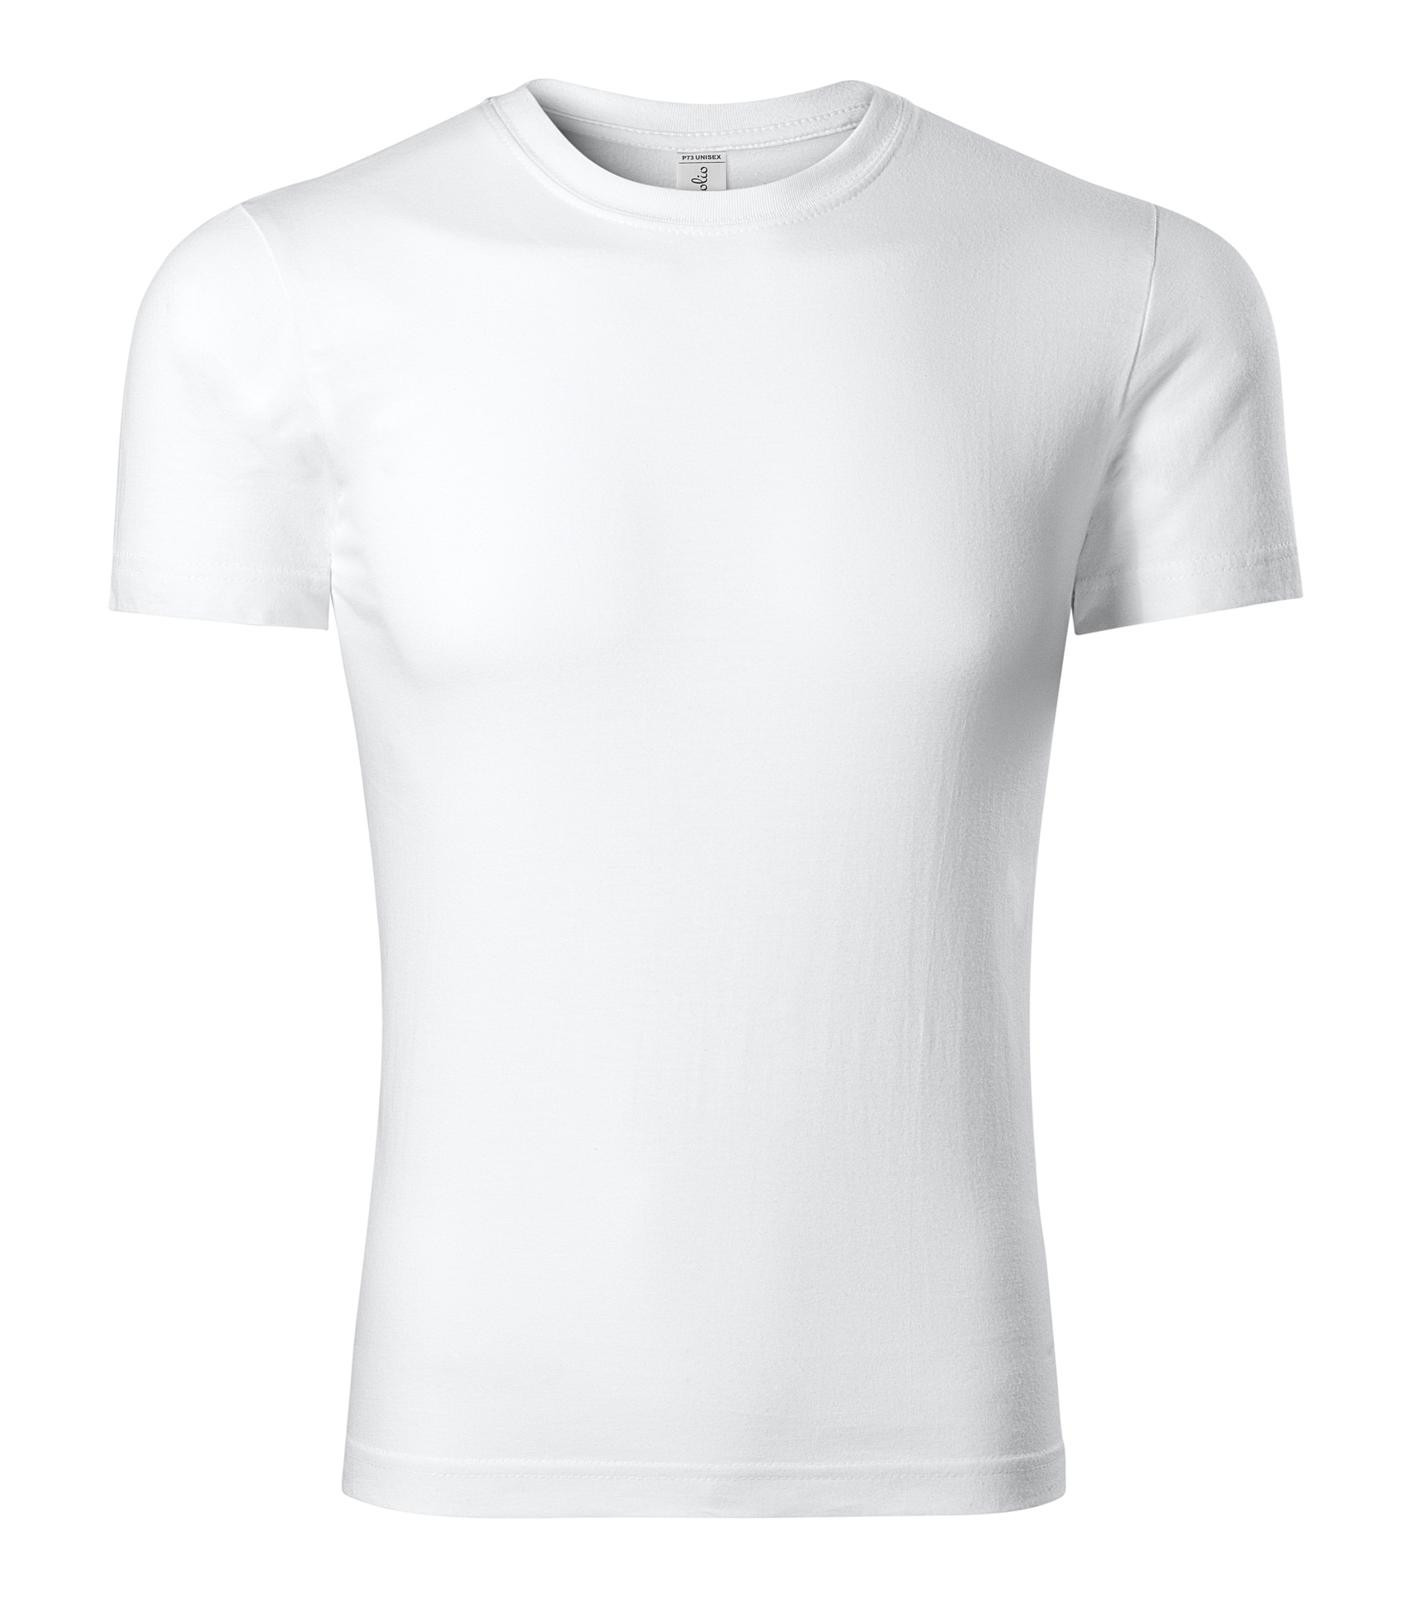 Unisex tričko Piccolio Paint P73 - veľkosť: M, farba: biela